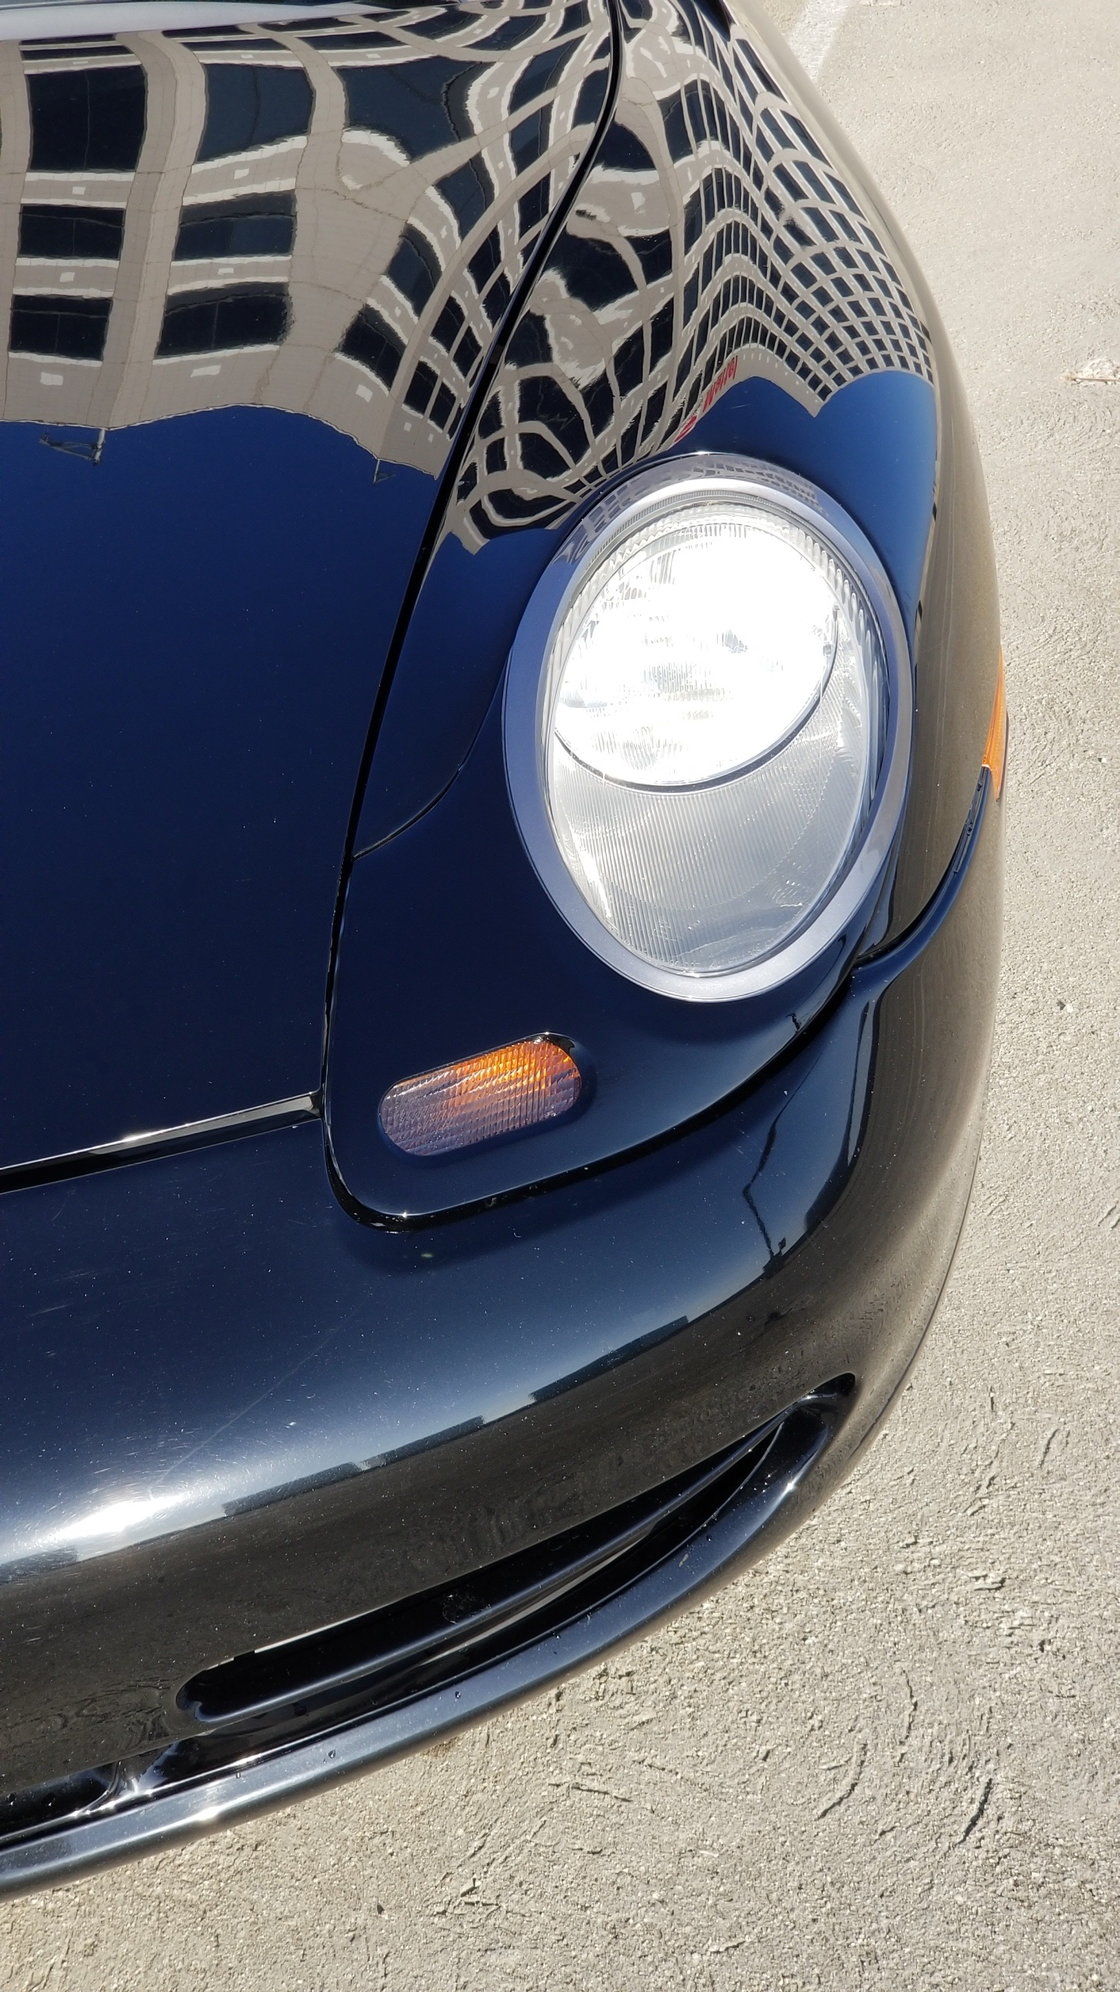 Lights - Porsche 986/996 mk1 Headlight Conversion Covers (Unpainted) - New - 1999 to 2001 Porsche 911 - 1996 to 2004 Porsche Boxster - Hawthorne, CA 90250, United States